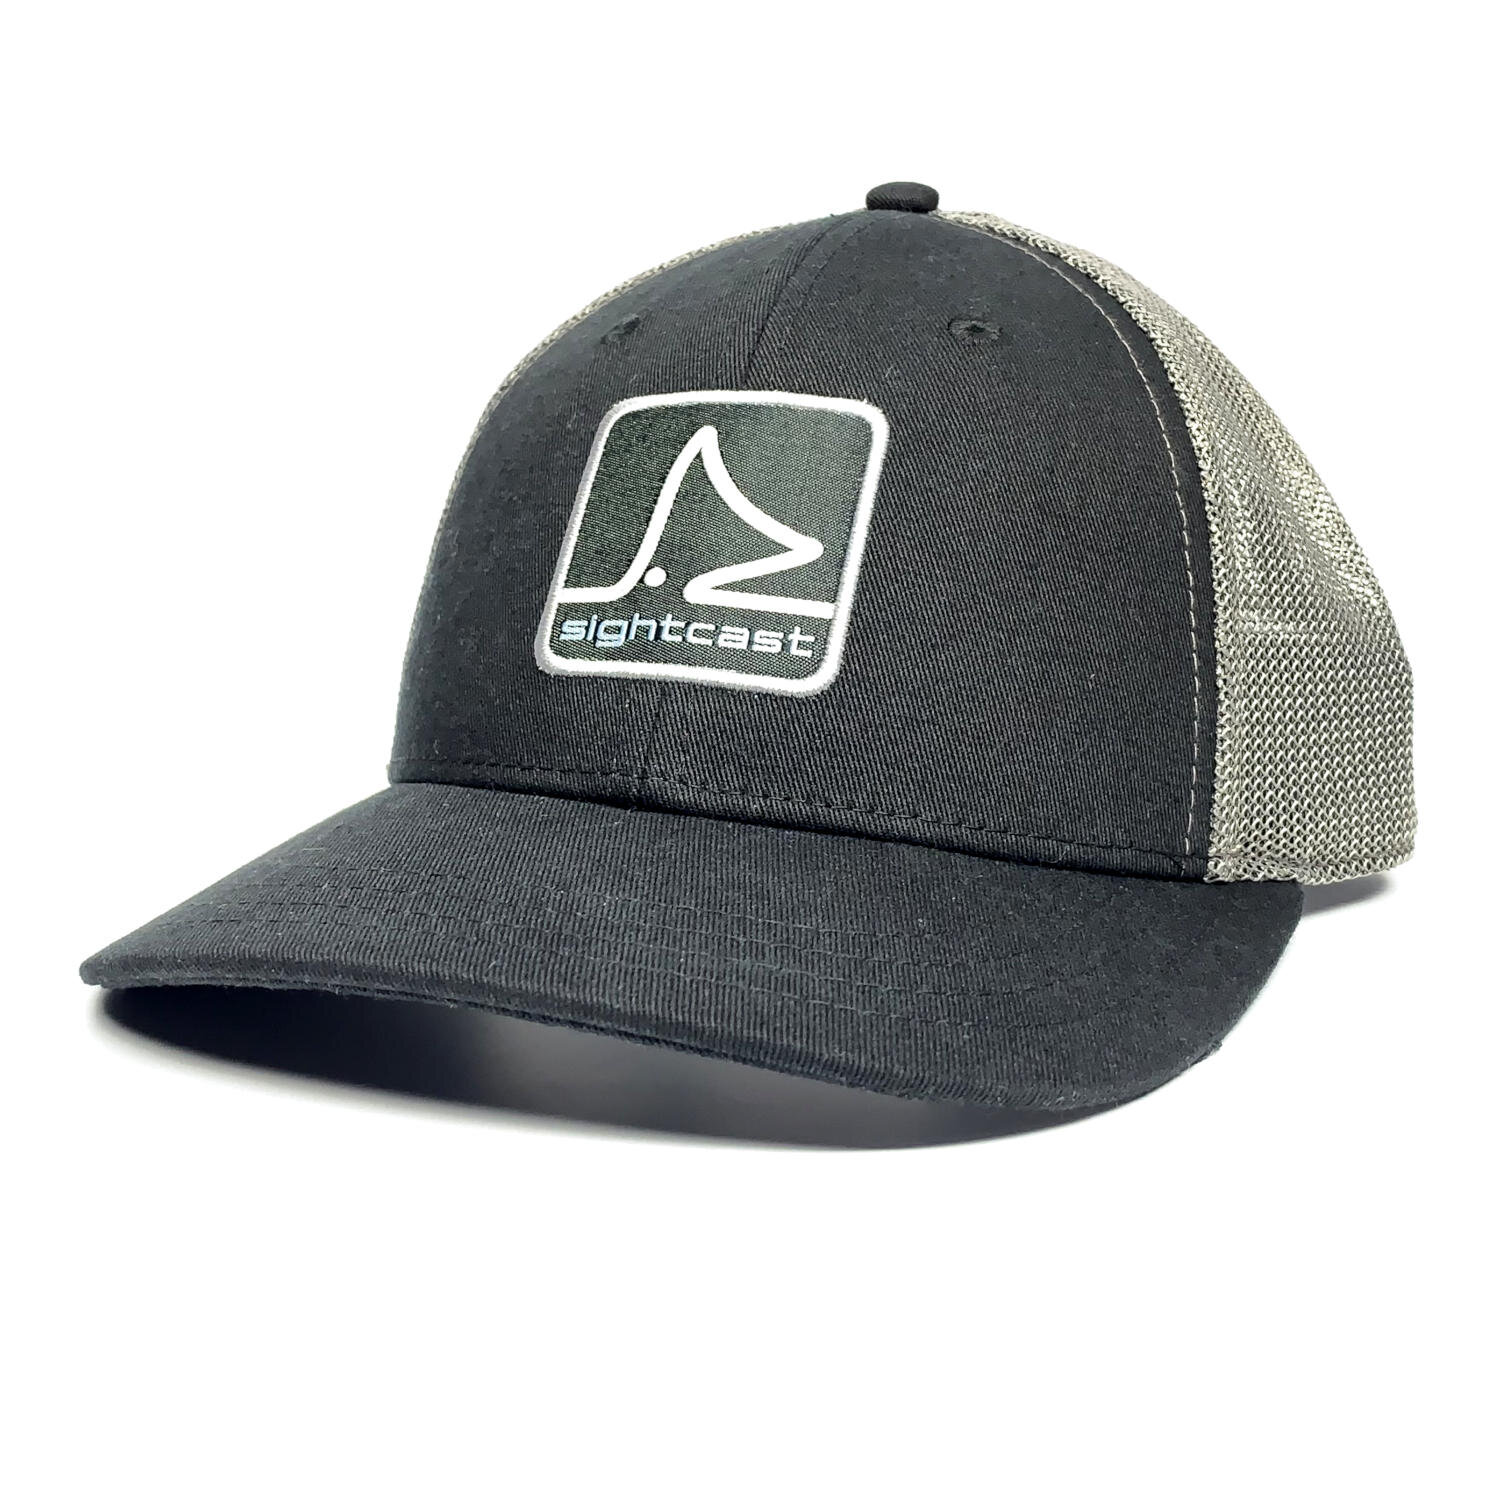 Sight Cast Fishing Company — Performance Fishing Hats